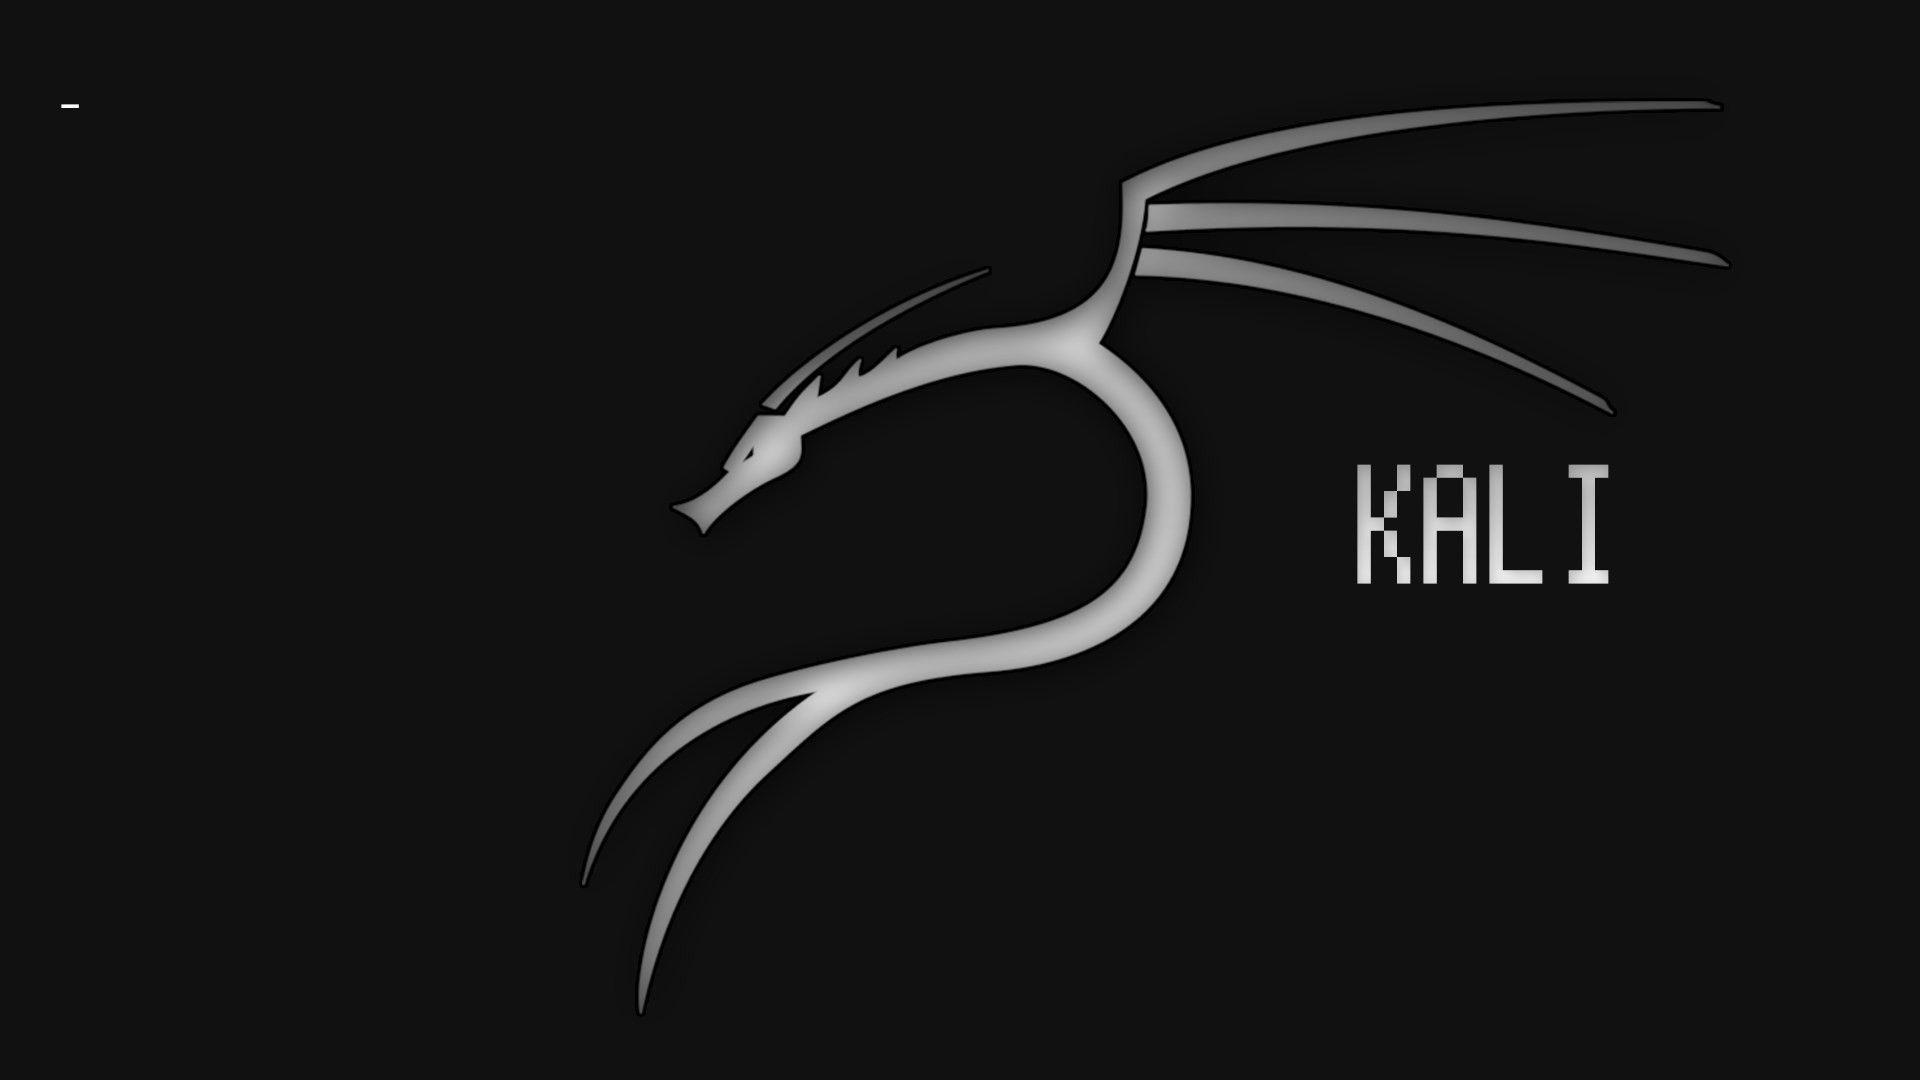 Android Kali Linux Dragon Wallpaper